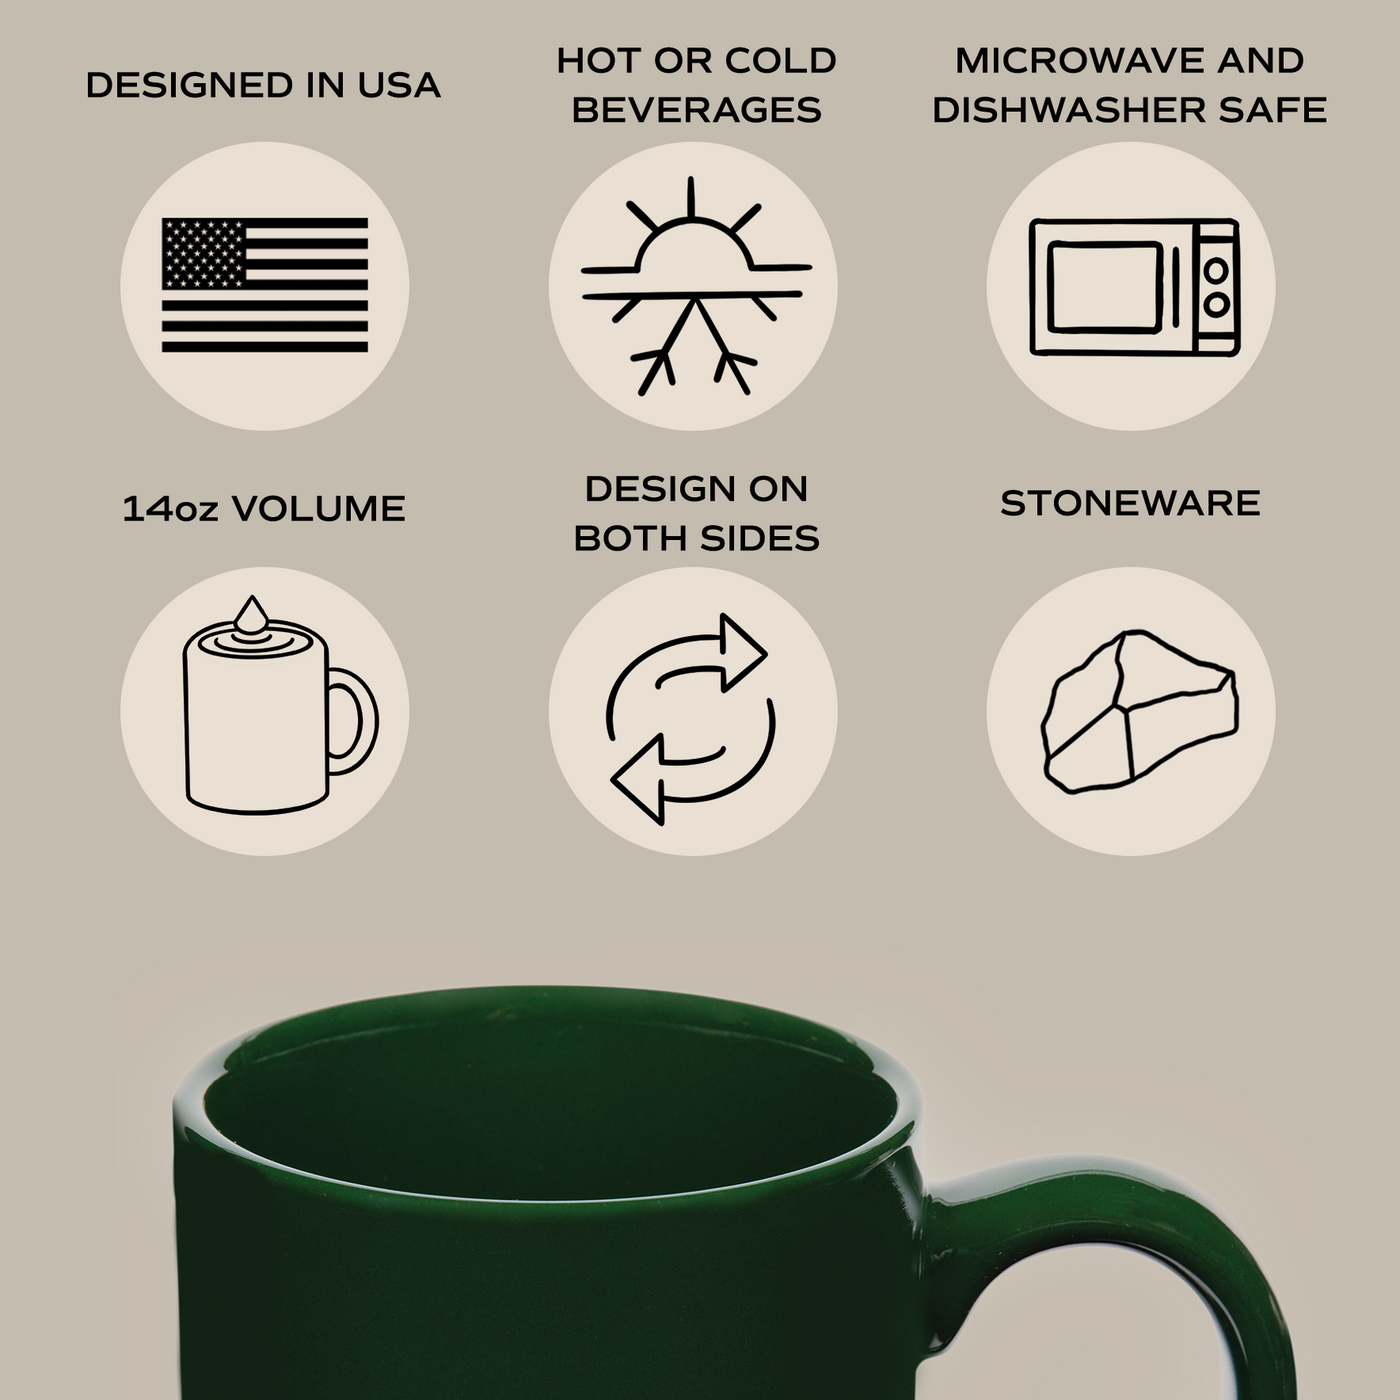 Comfort and Joy 14oz. Green Stoneware Coffee Mug